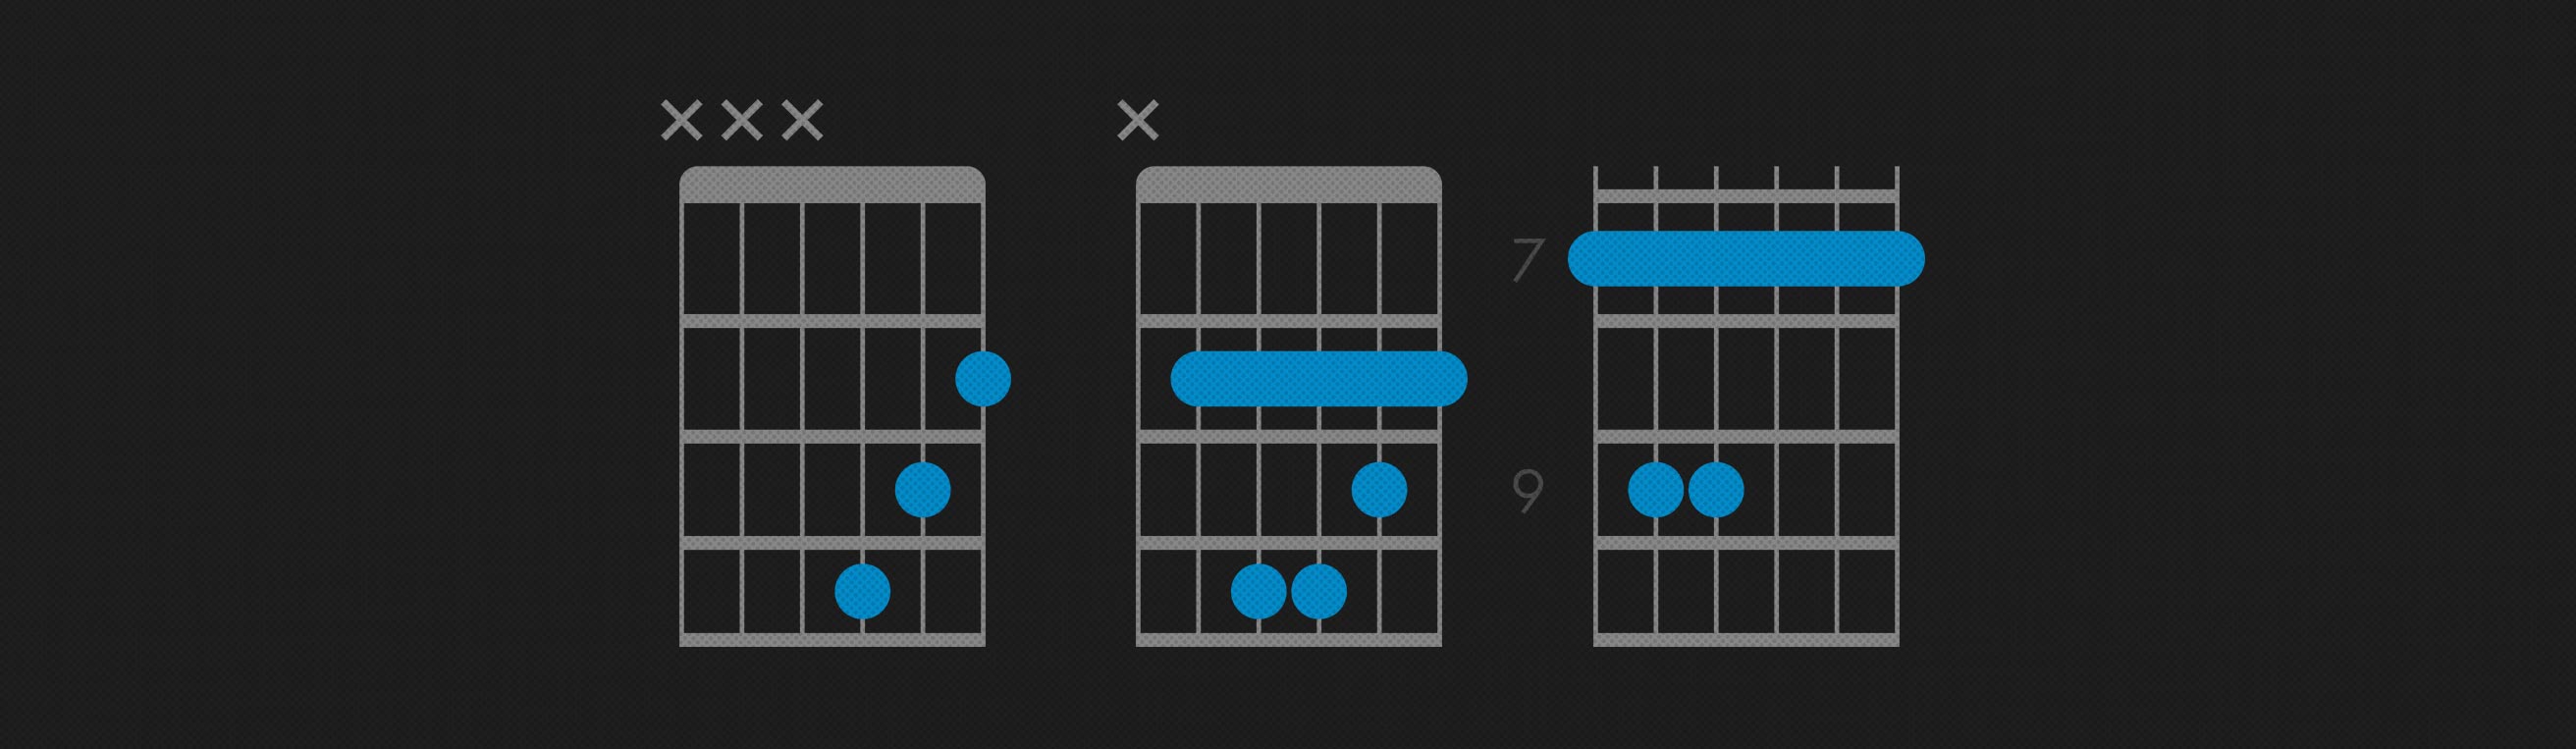 How To Play The B Minor Chord On Guitar | Bm Guitar Chord | Fender